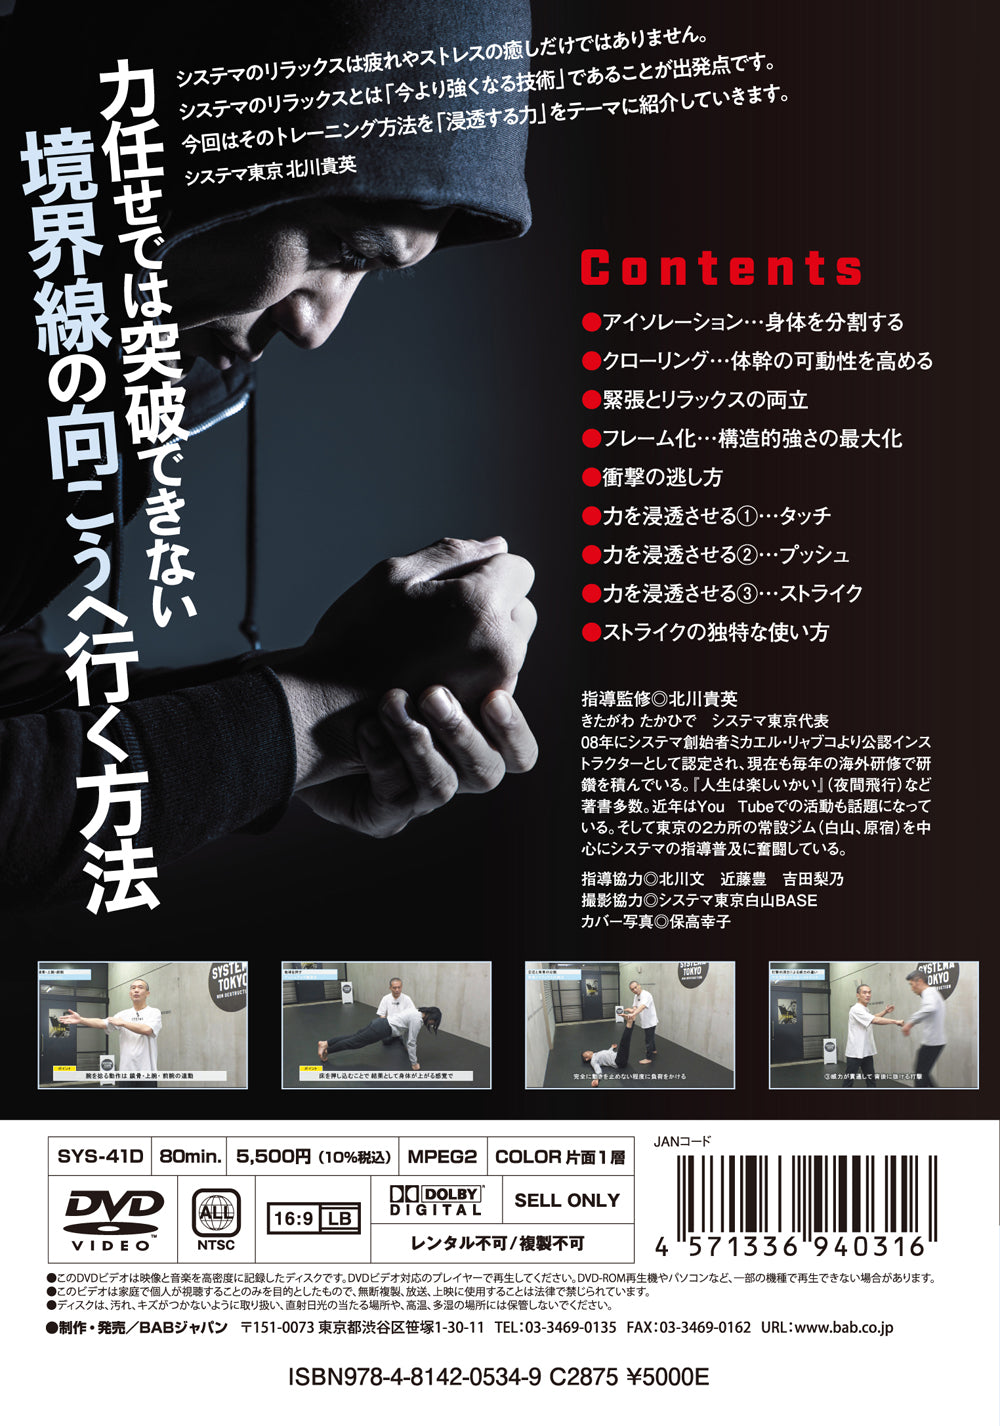 Systema Tokyo Penetrating Power DVD by Takahide Kitagawa